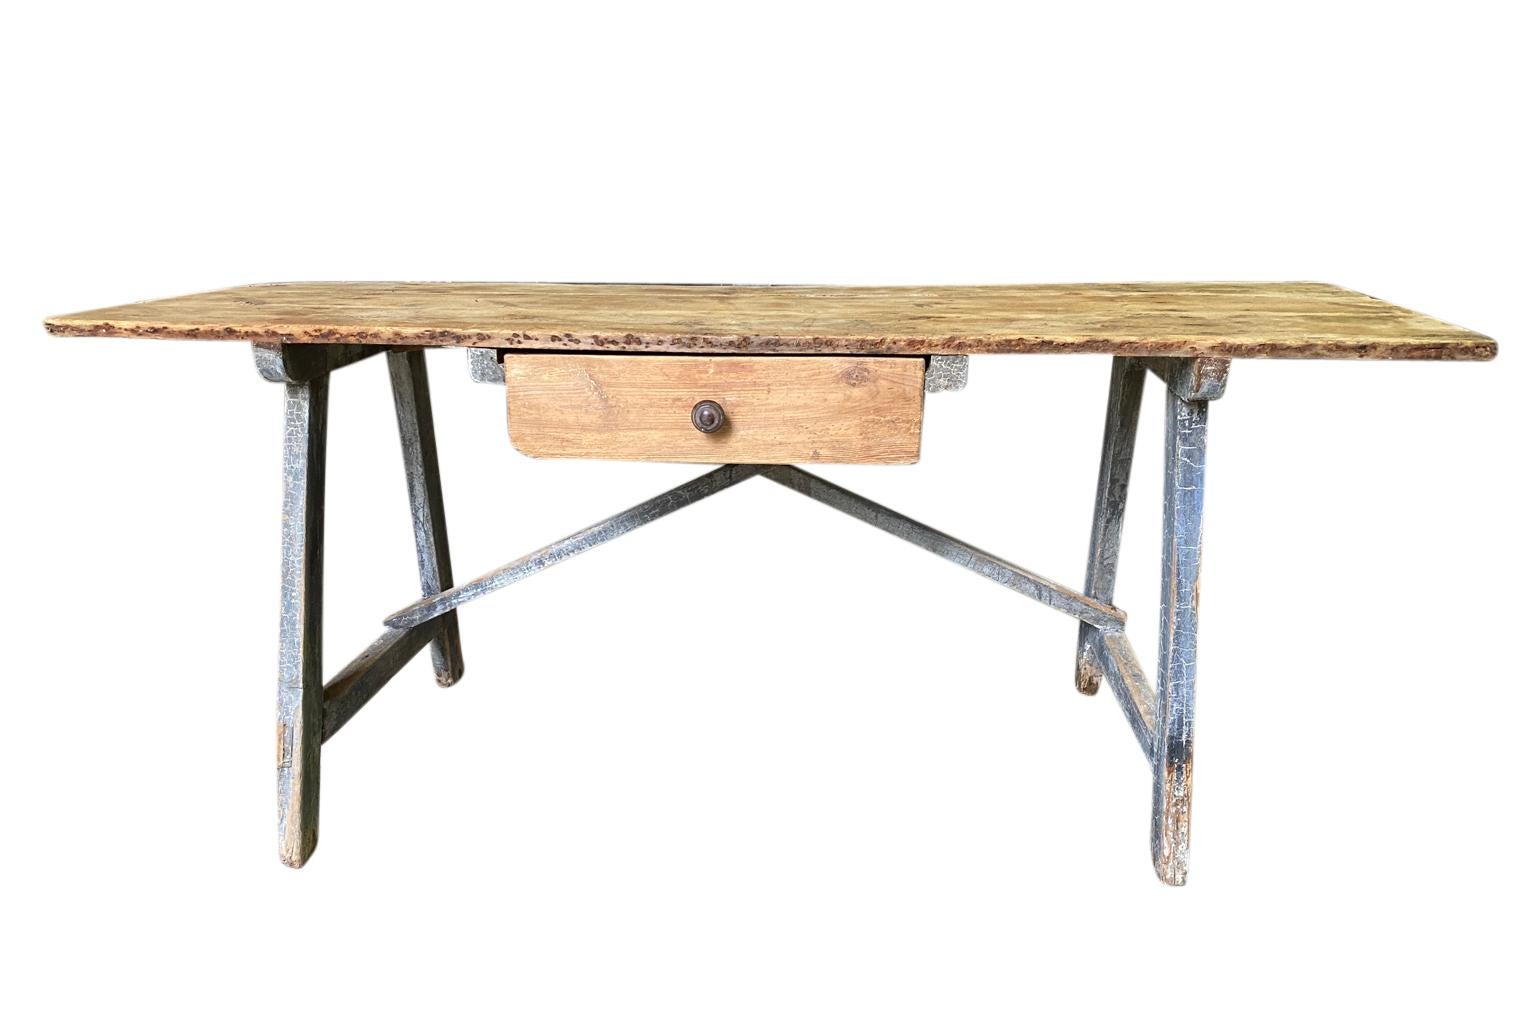 Spanish 19th century Writing Table - Desk In Good Condition For Sale In Atlanta, GA